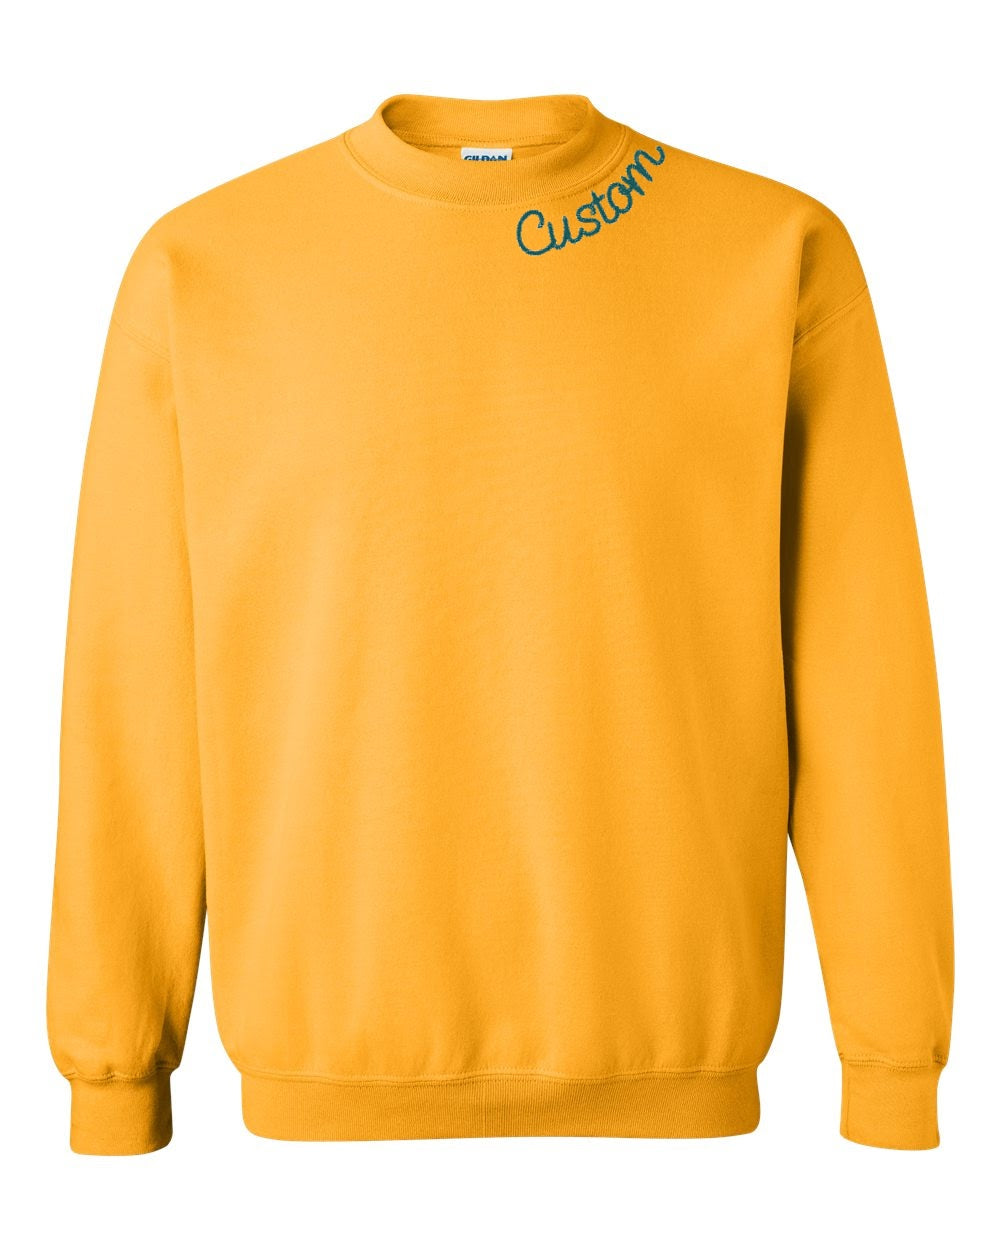 Yellow Custom Embroidered Crewneck Sweatshirt - Personalized Chain Stitch